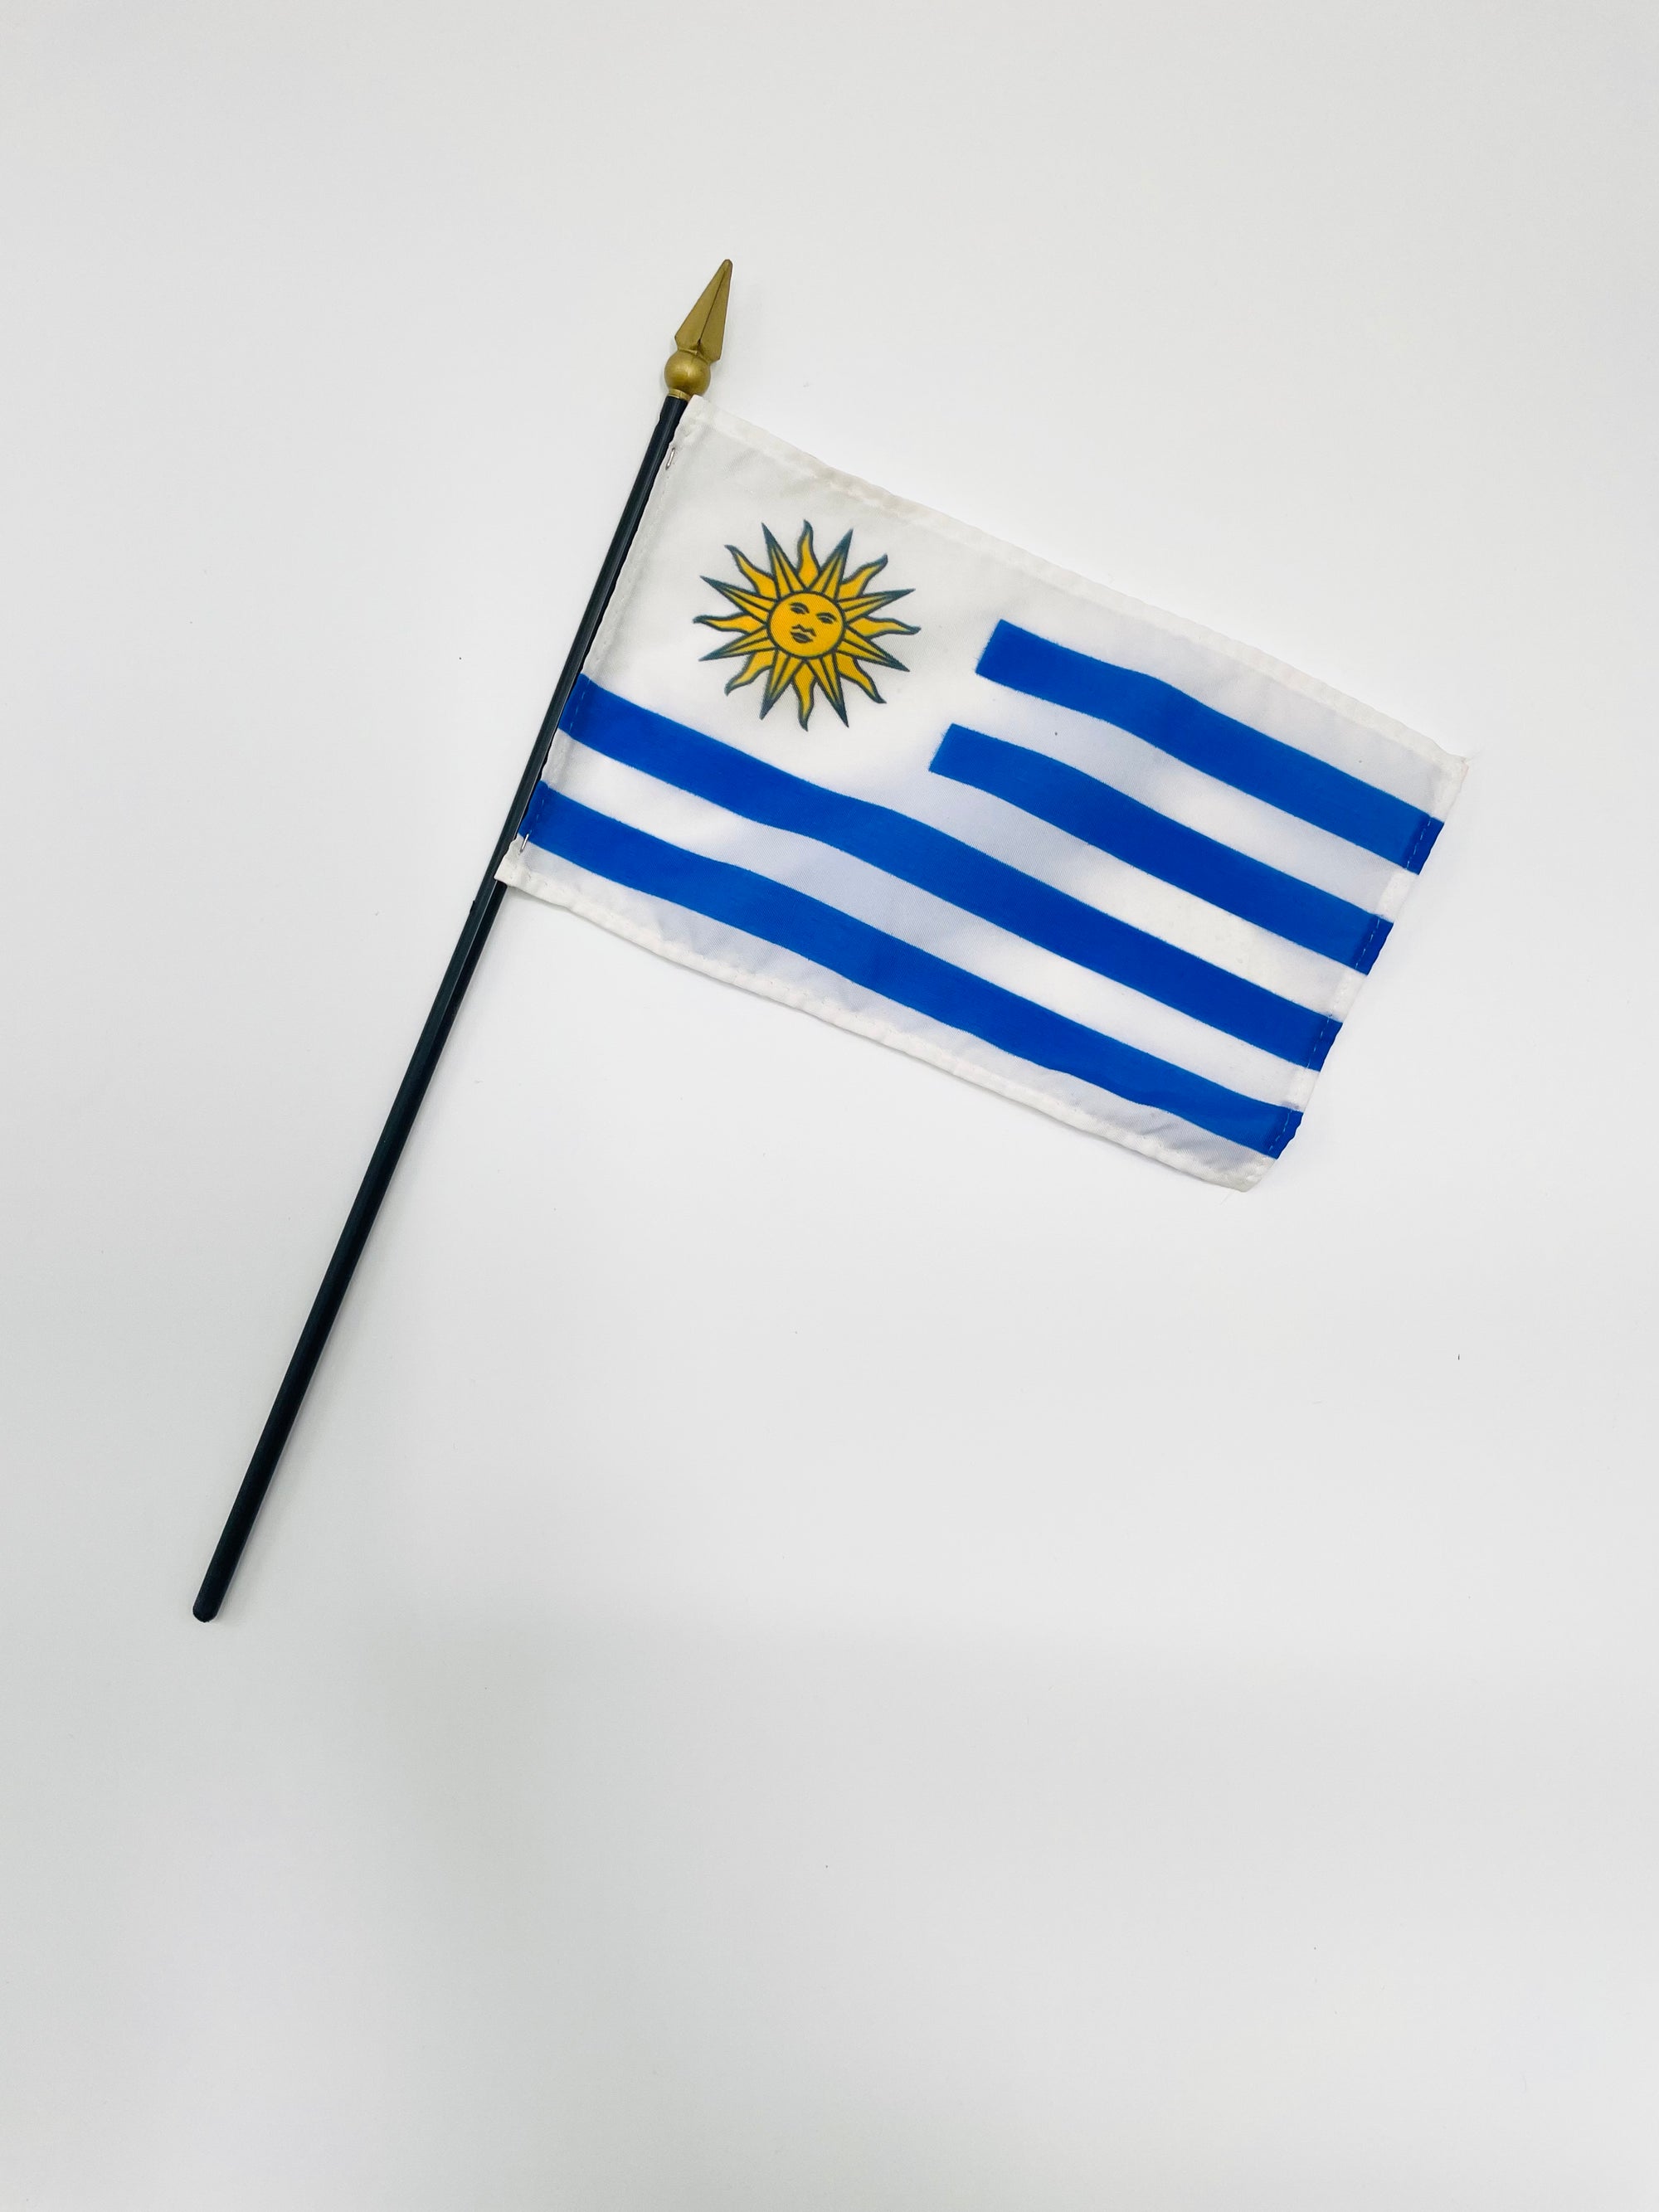 Uruguay 4" x 6" Mounted Handheld Stick Flags